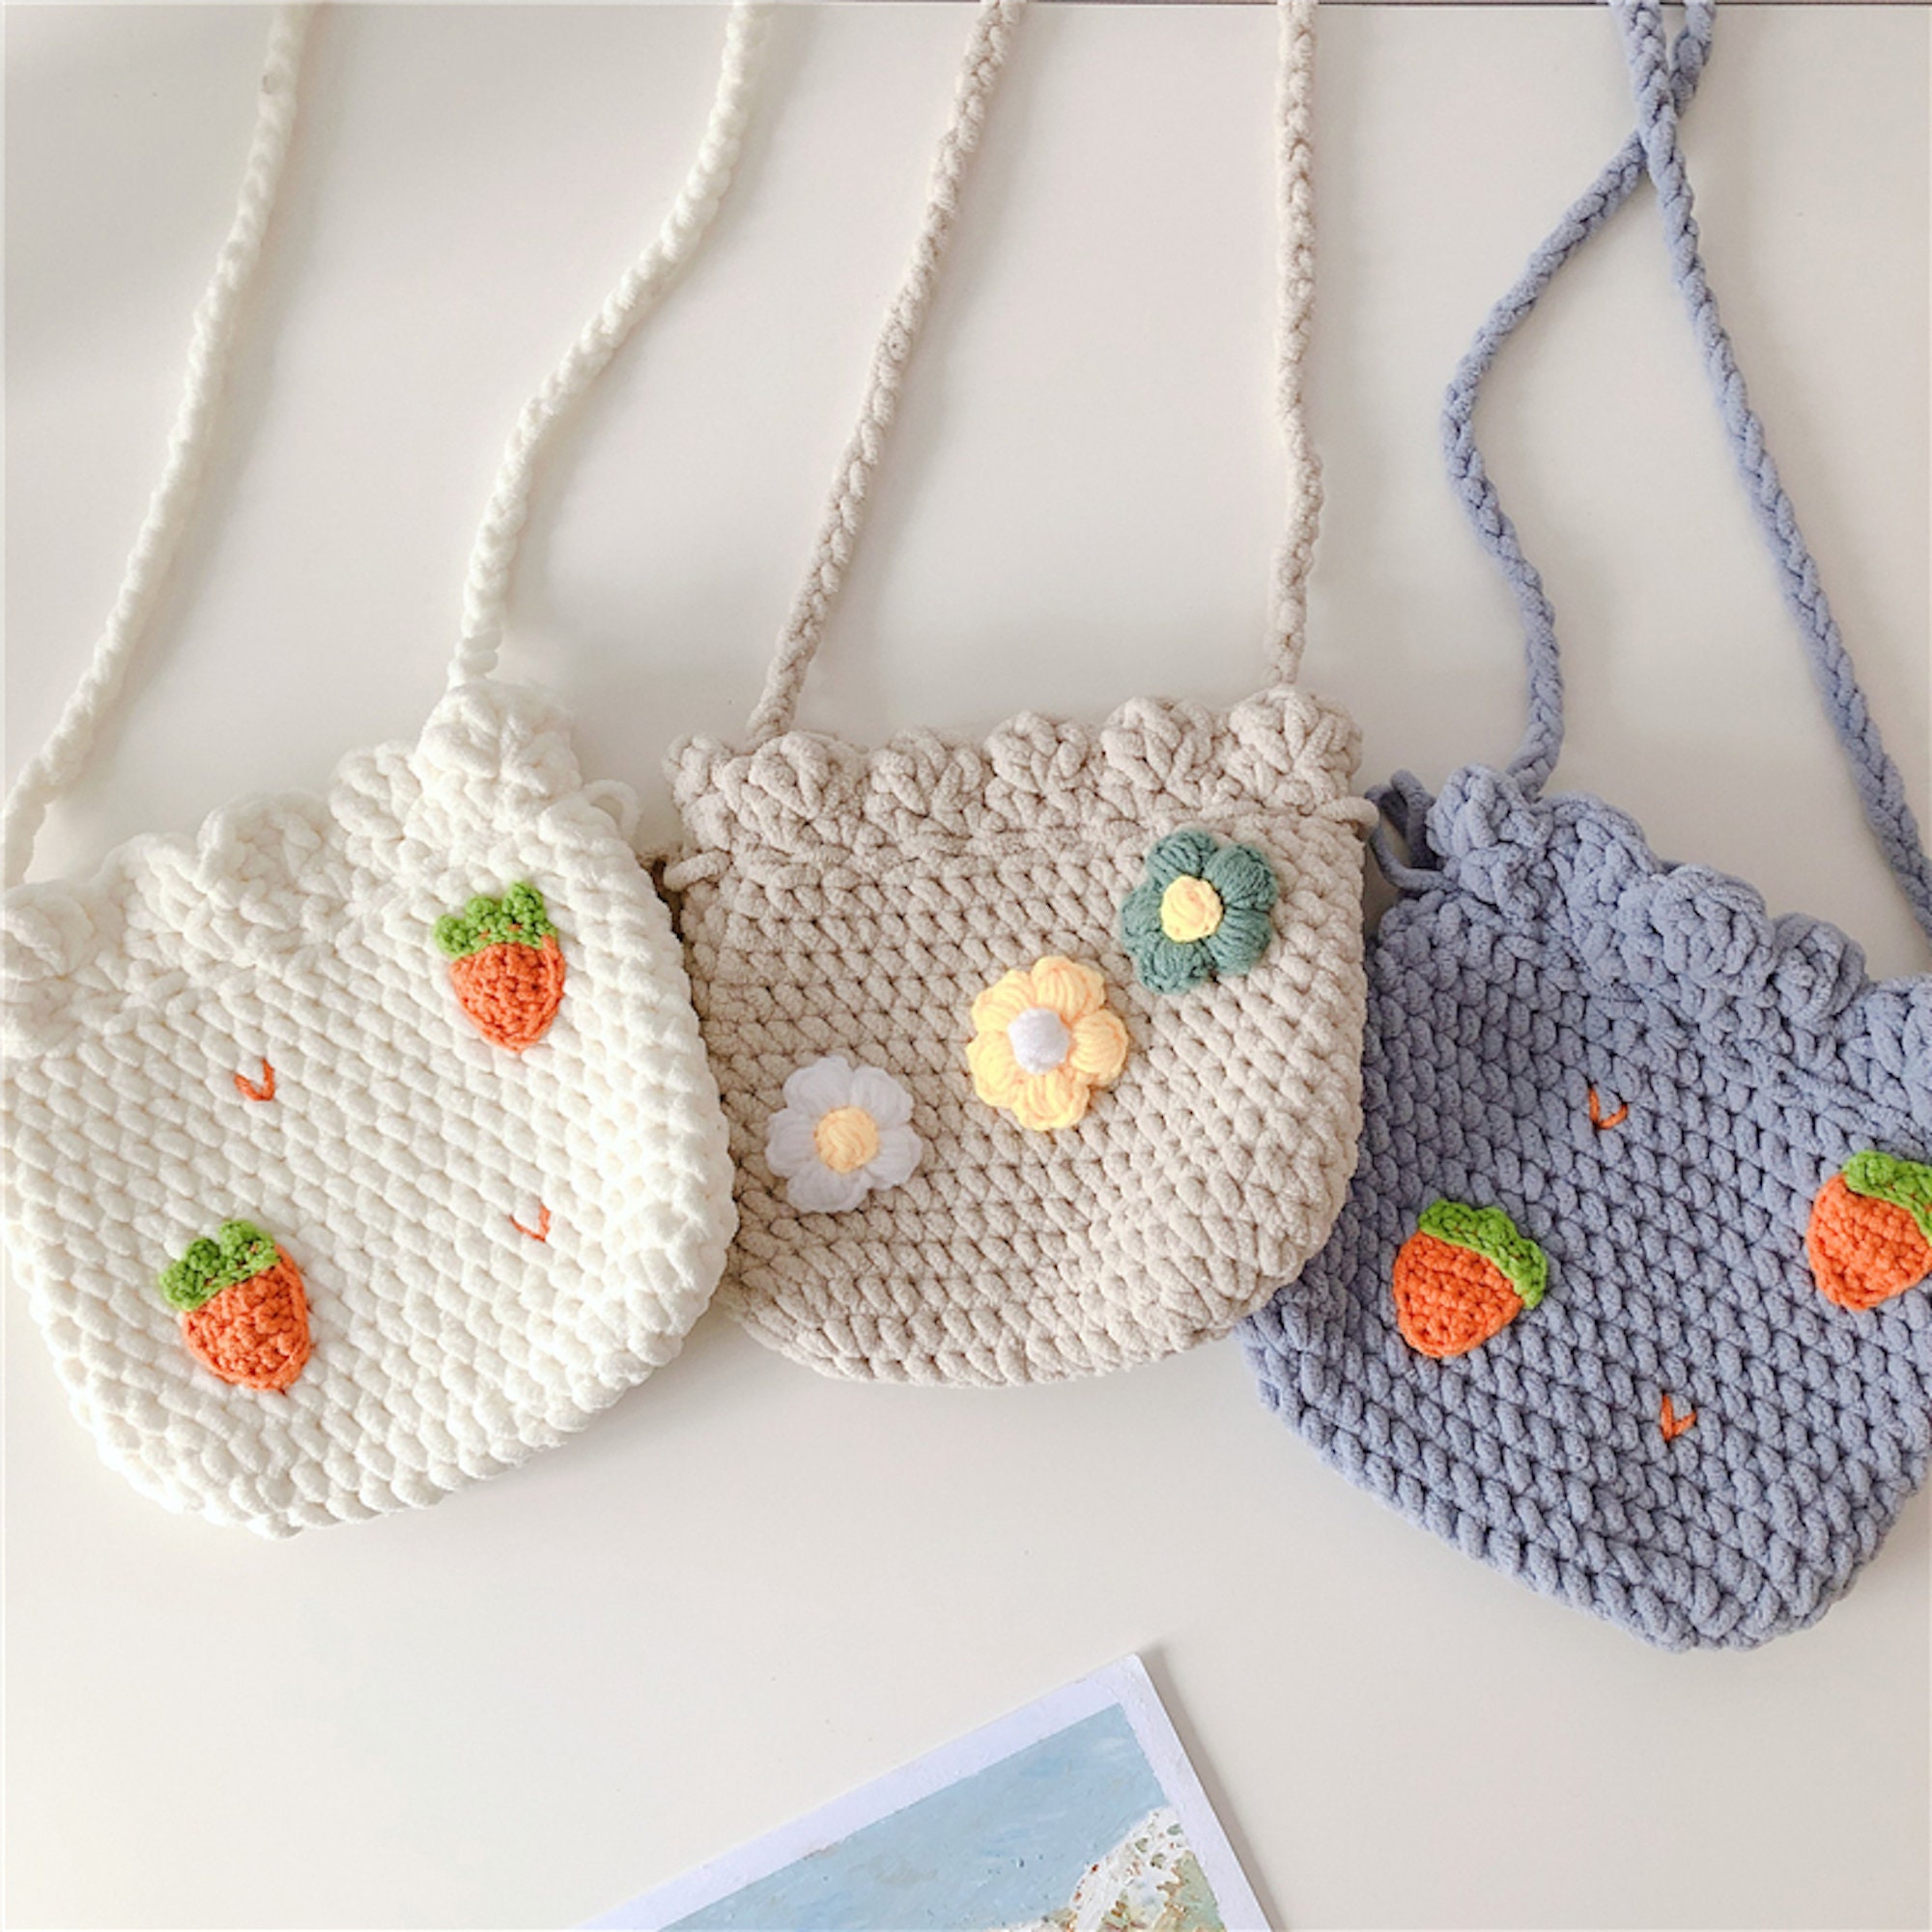 The Best Free Crochet Handbag Patterns - Easy Crochet Patterns